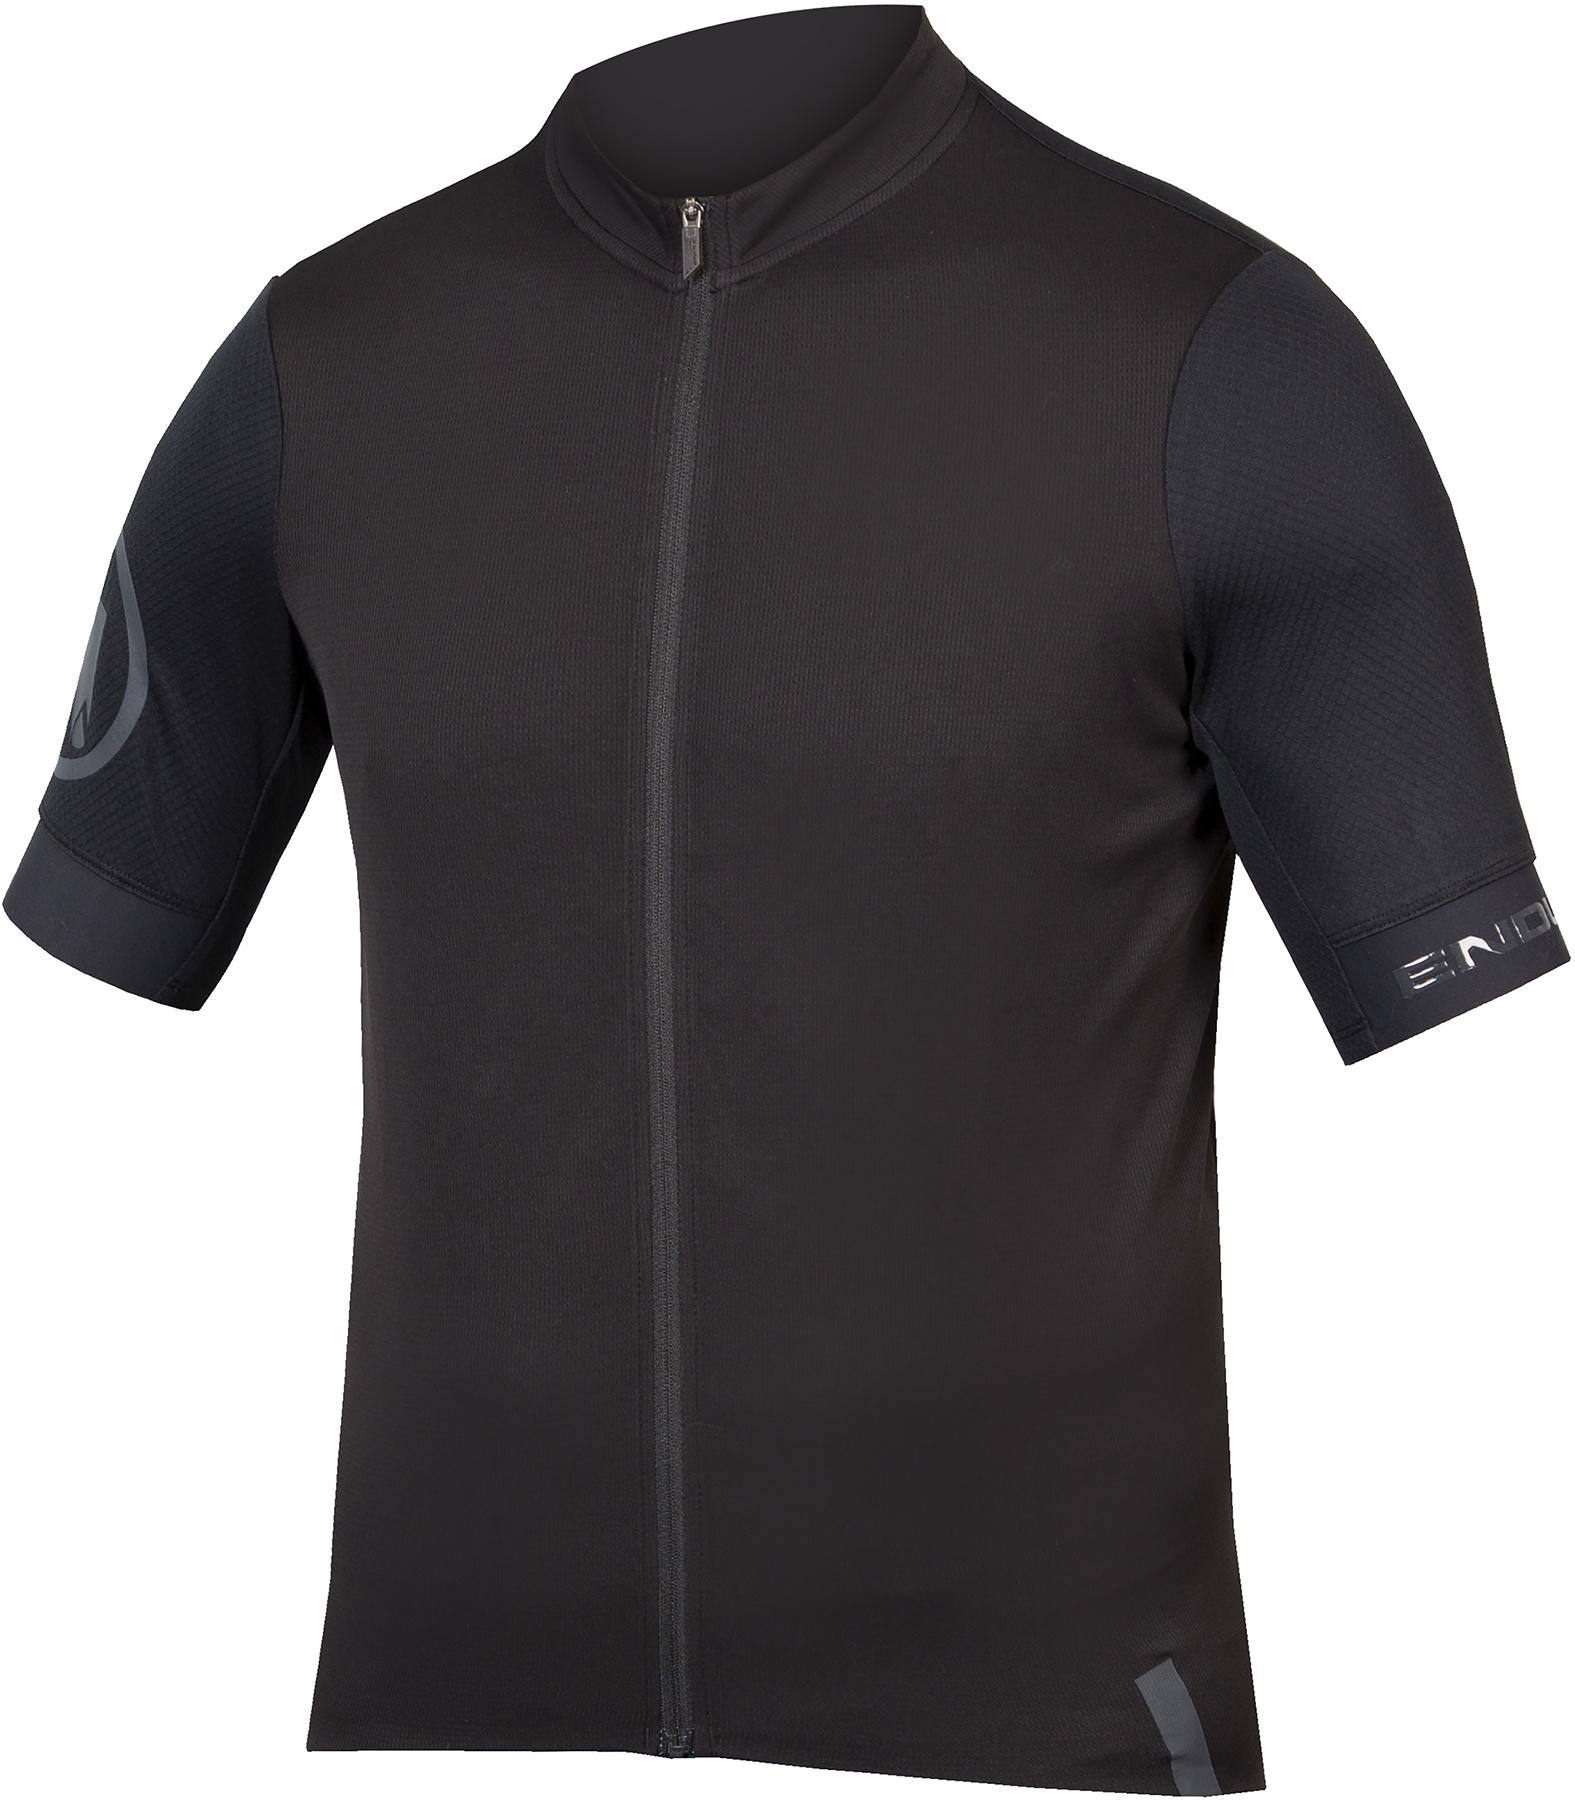 Endura Fs260 Short Sleeve Cycling Jersey  Black